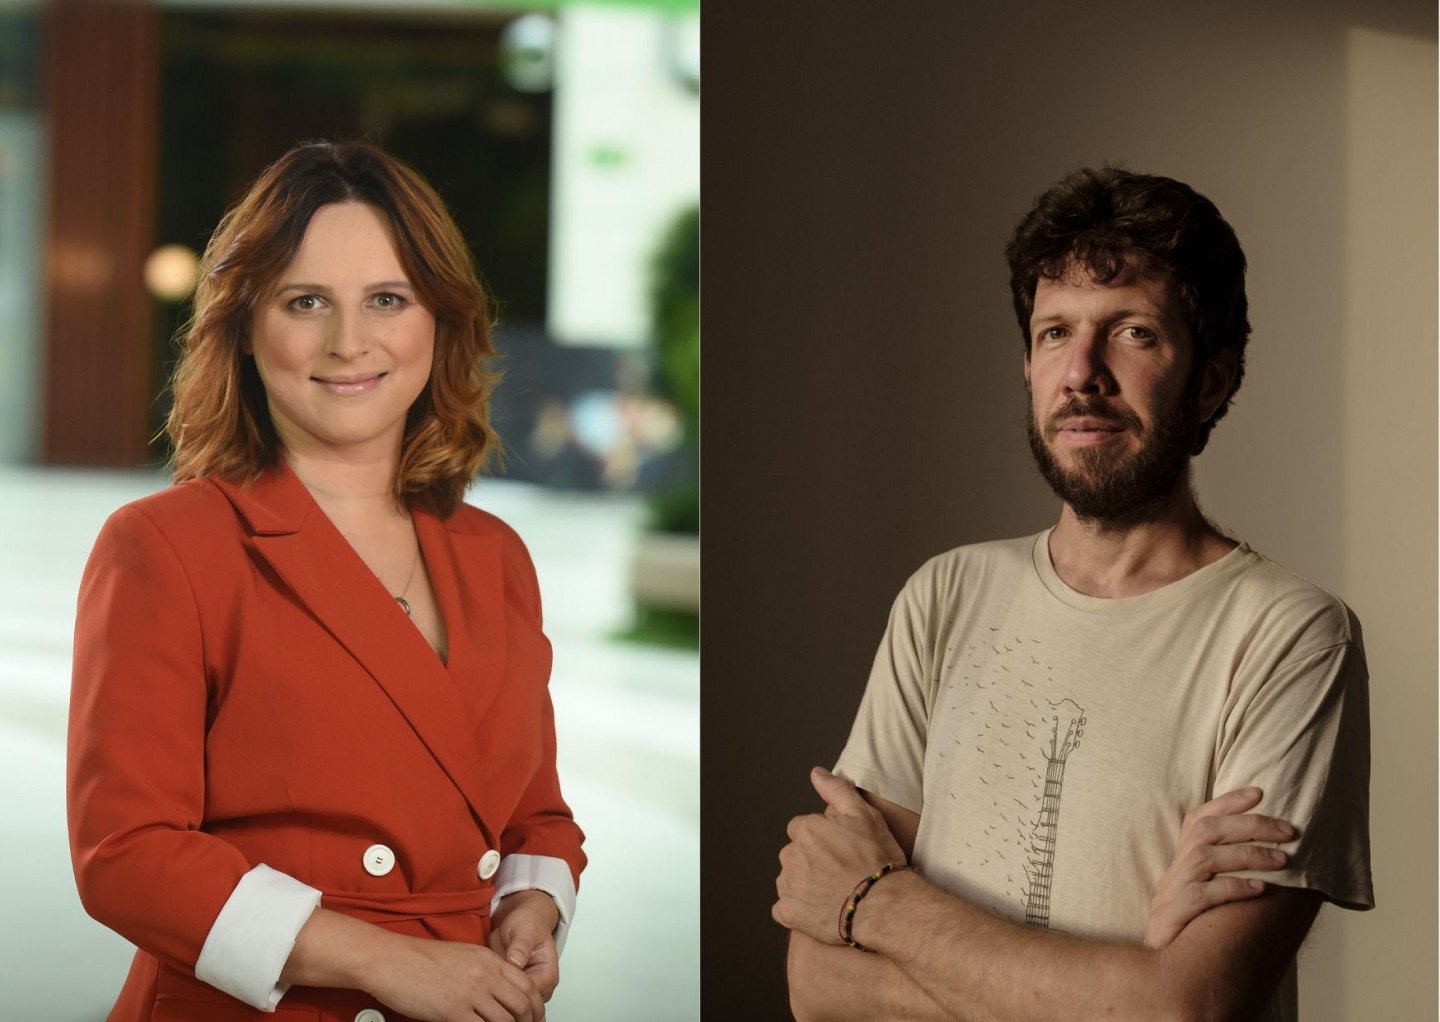 Giacomo Zandonini and Justyna Suchecka named Evens Journalism Prize laureates